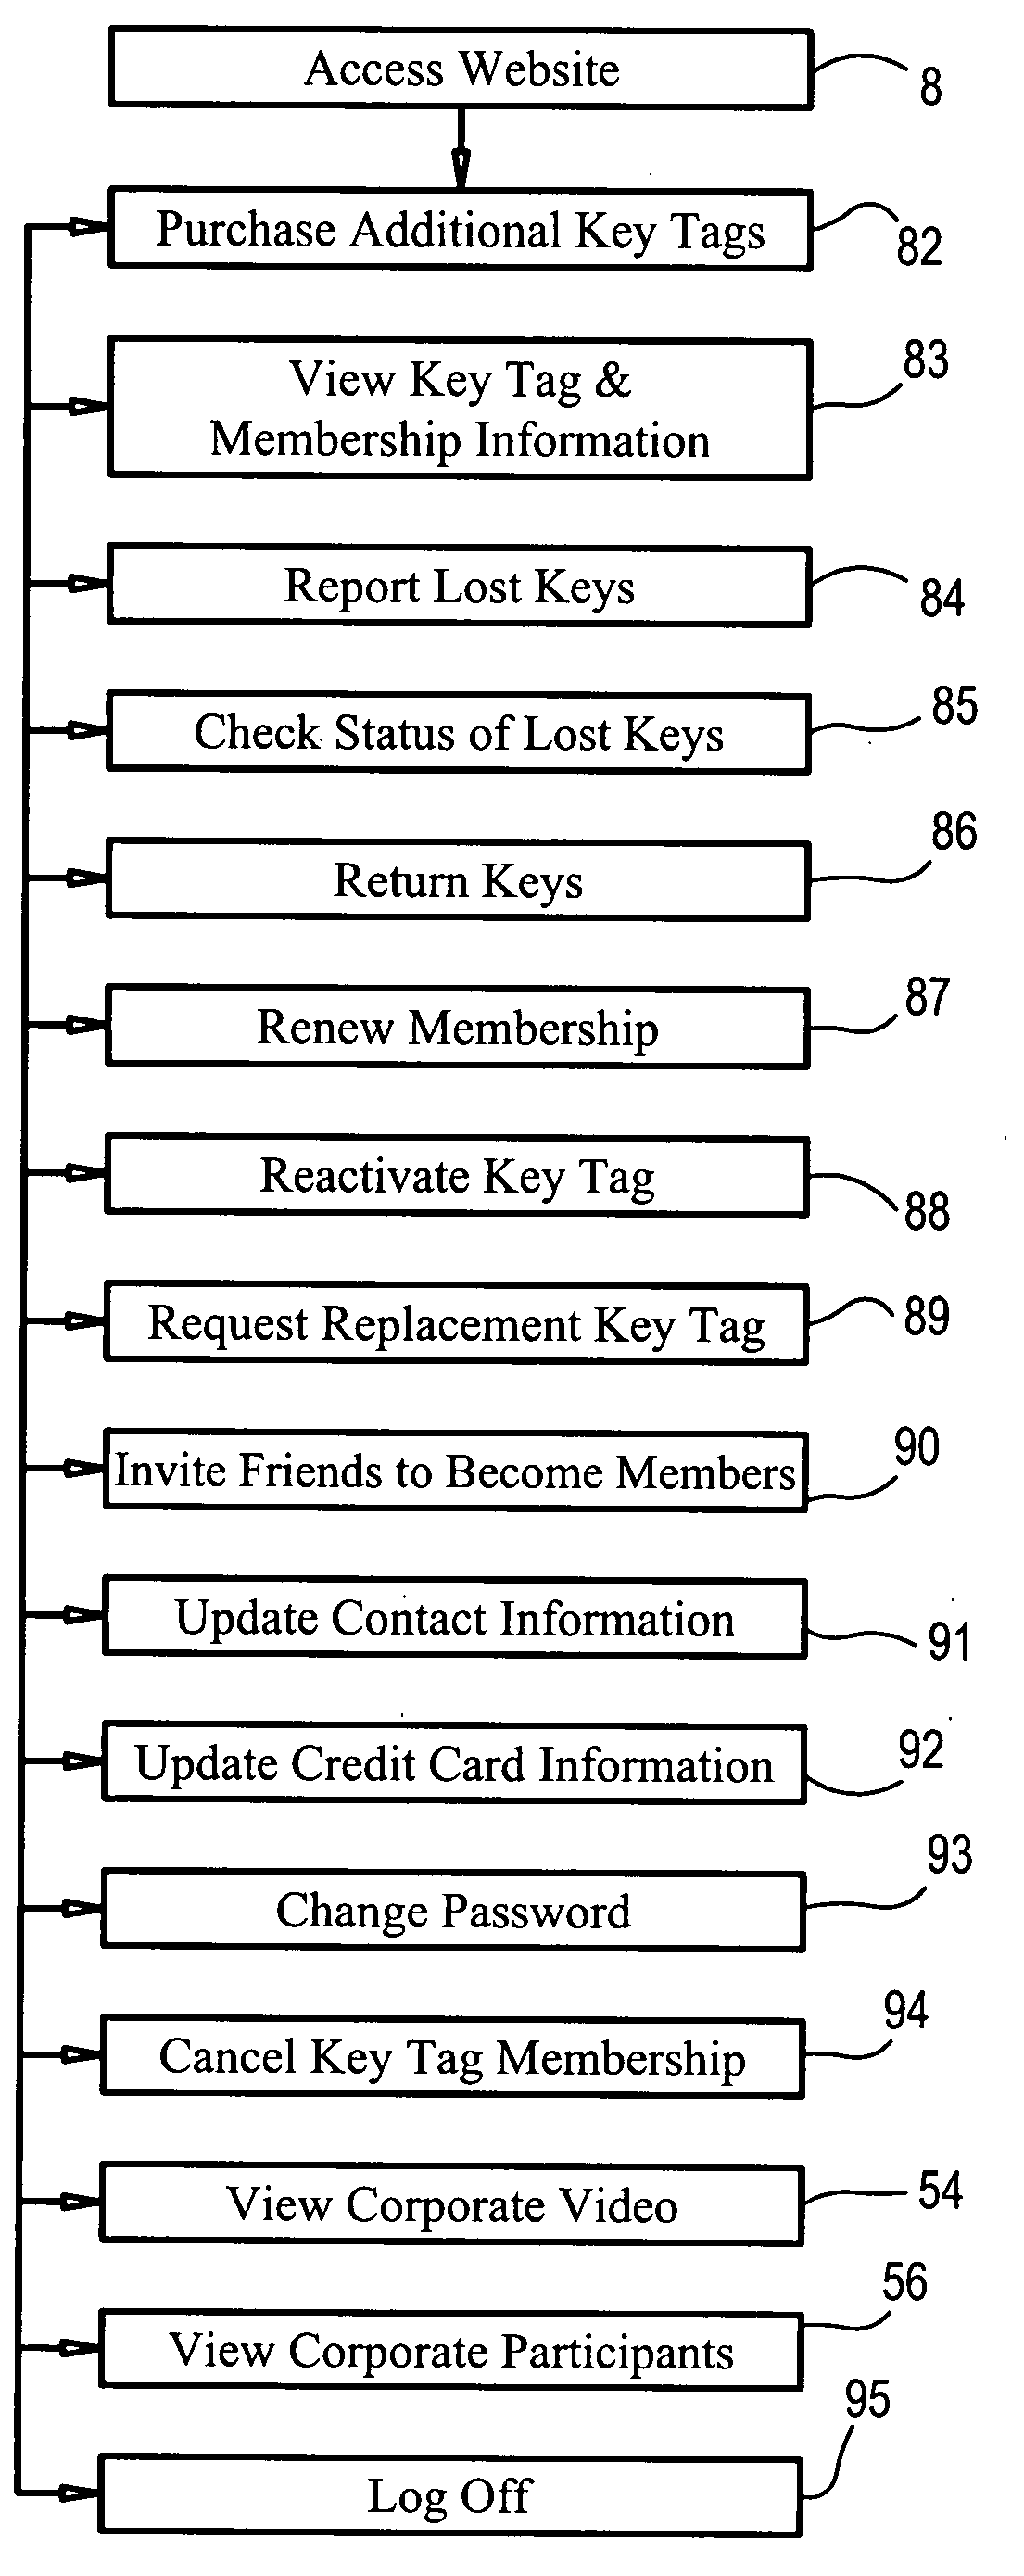 Lost key rewards system and method